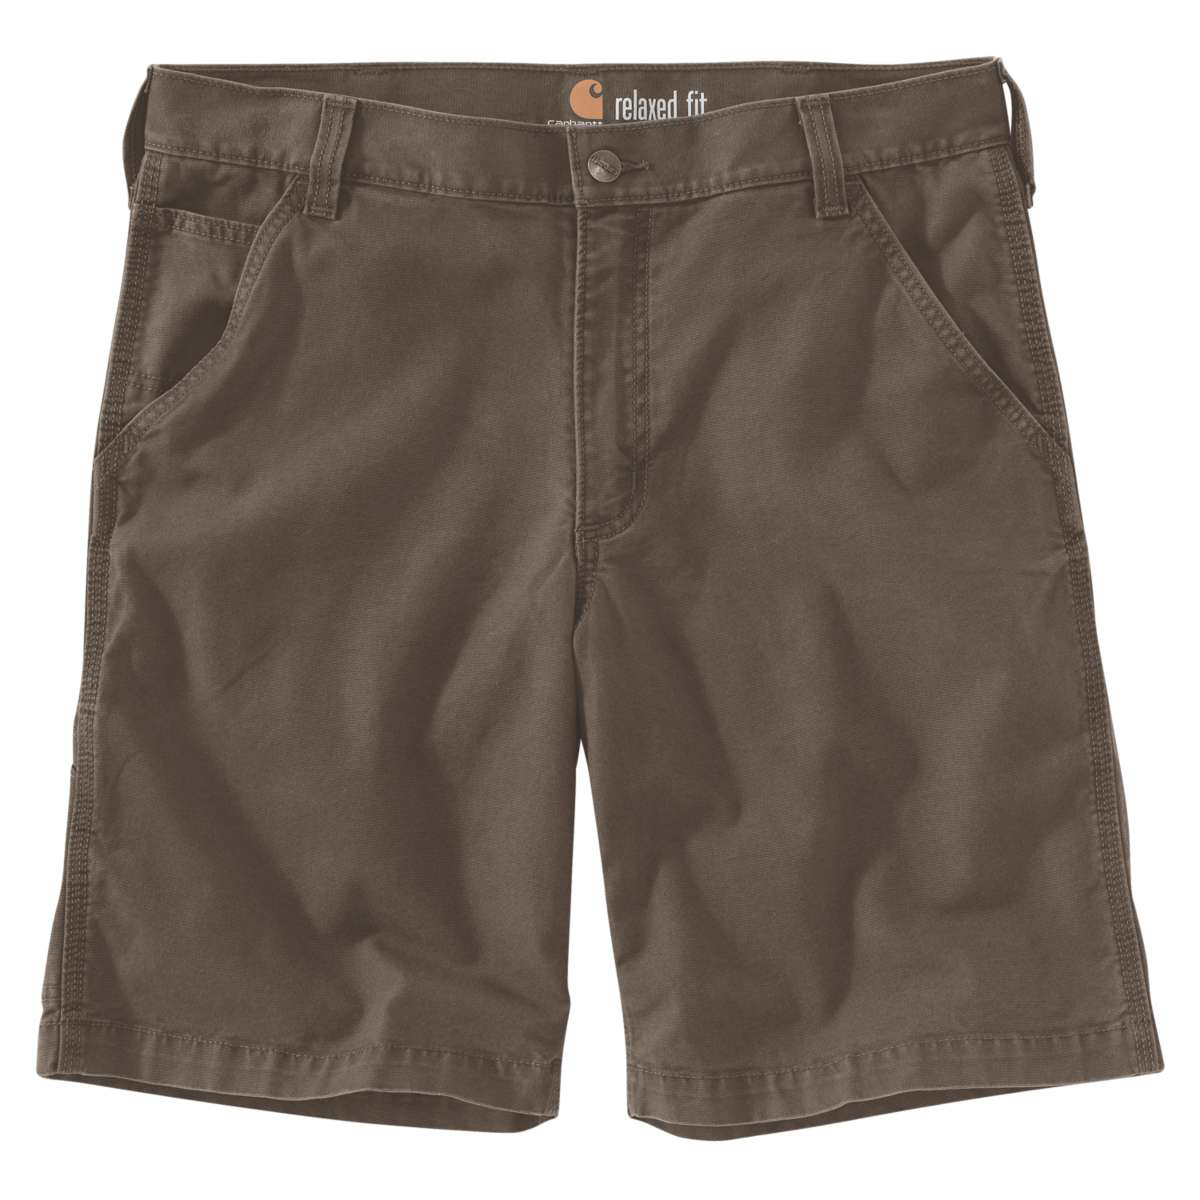 Carhartt Men's Rugged Flex Rigby Shorts - Brown, 33